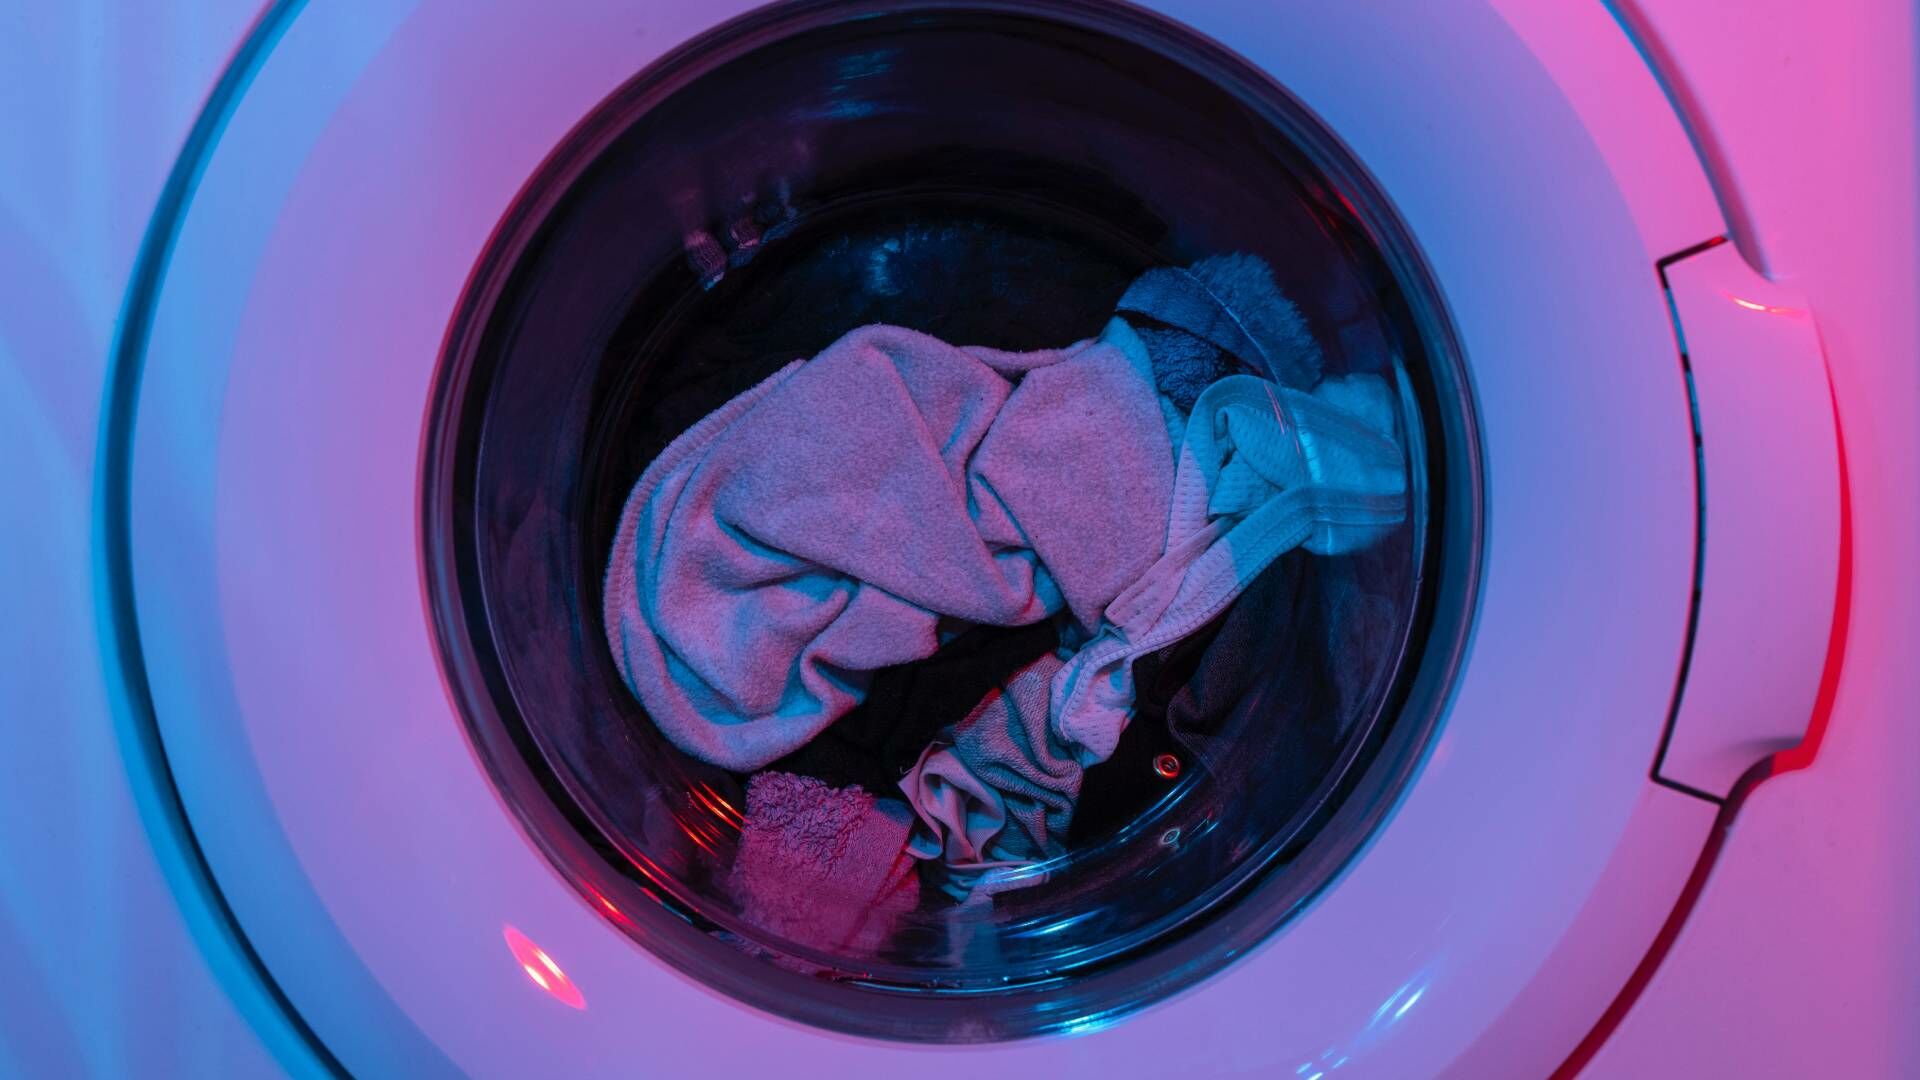 Colorful washing machine